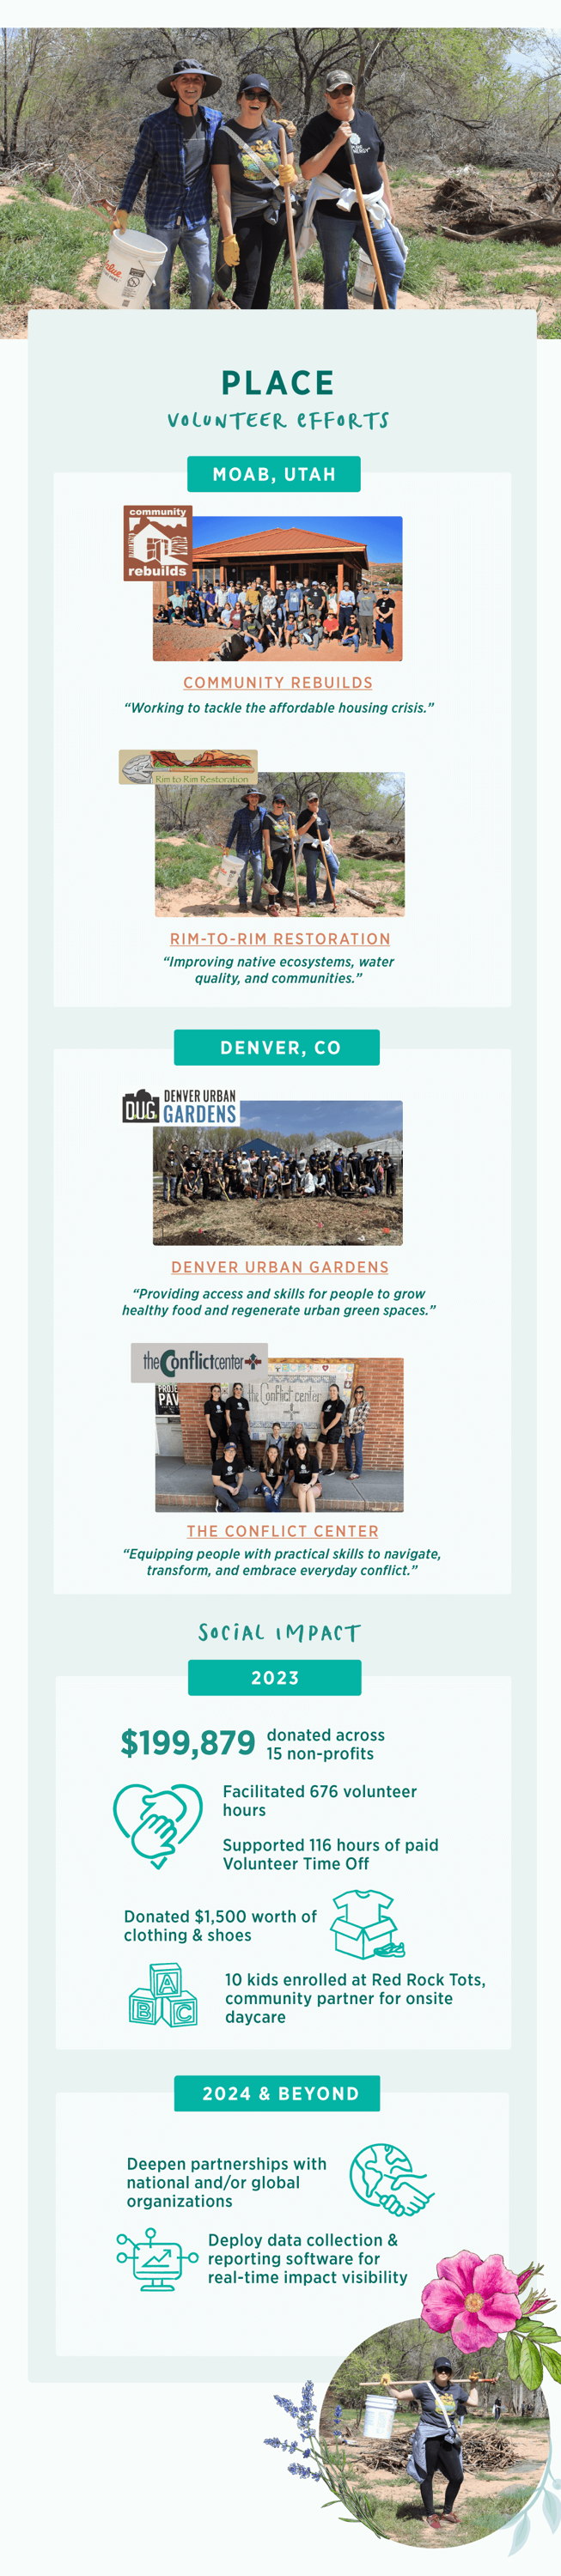 Place (Volunteer Efforts): Community Rebuilds, Rim to Rim Restoration, Denver Urban Gardens, Conflict Center